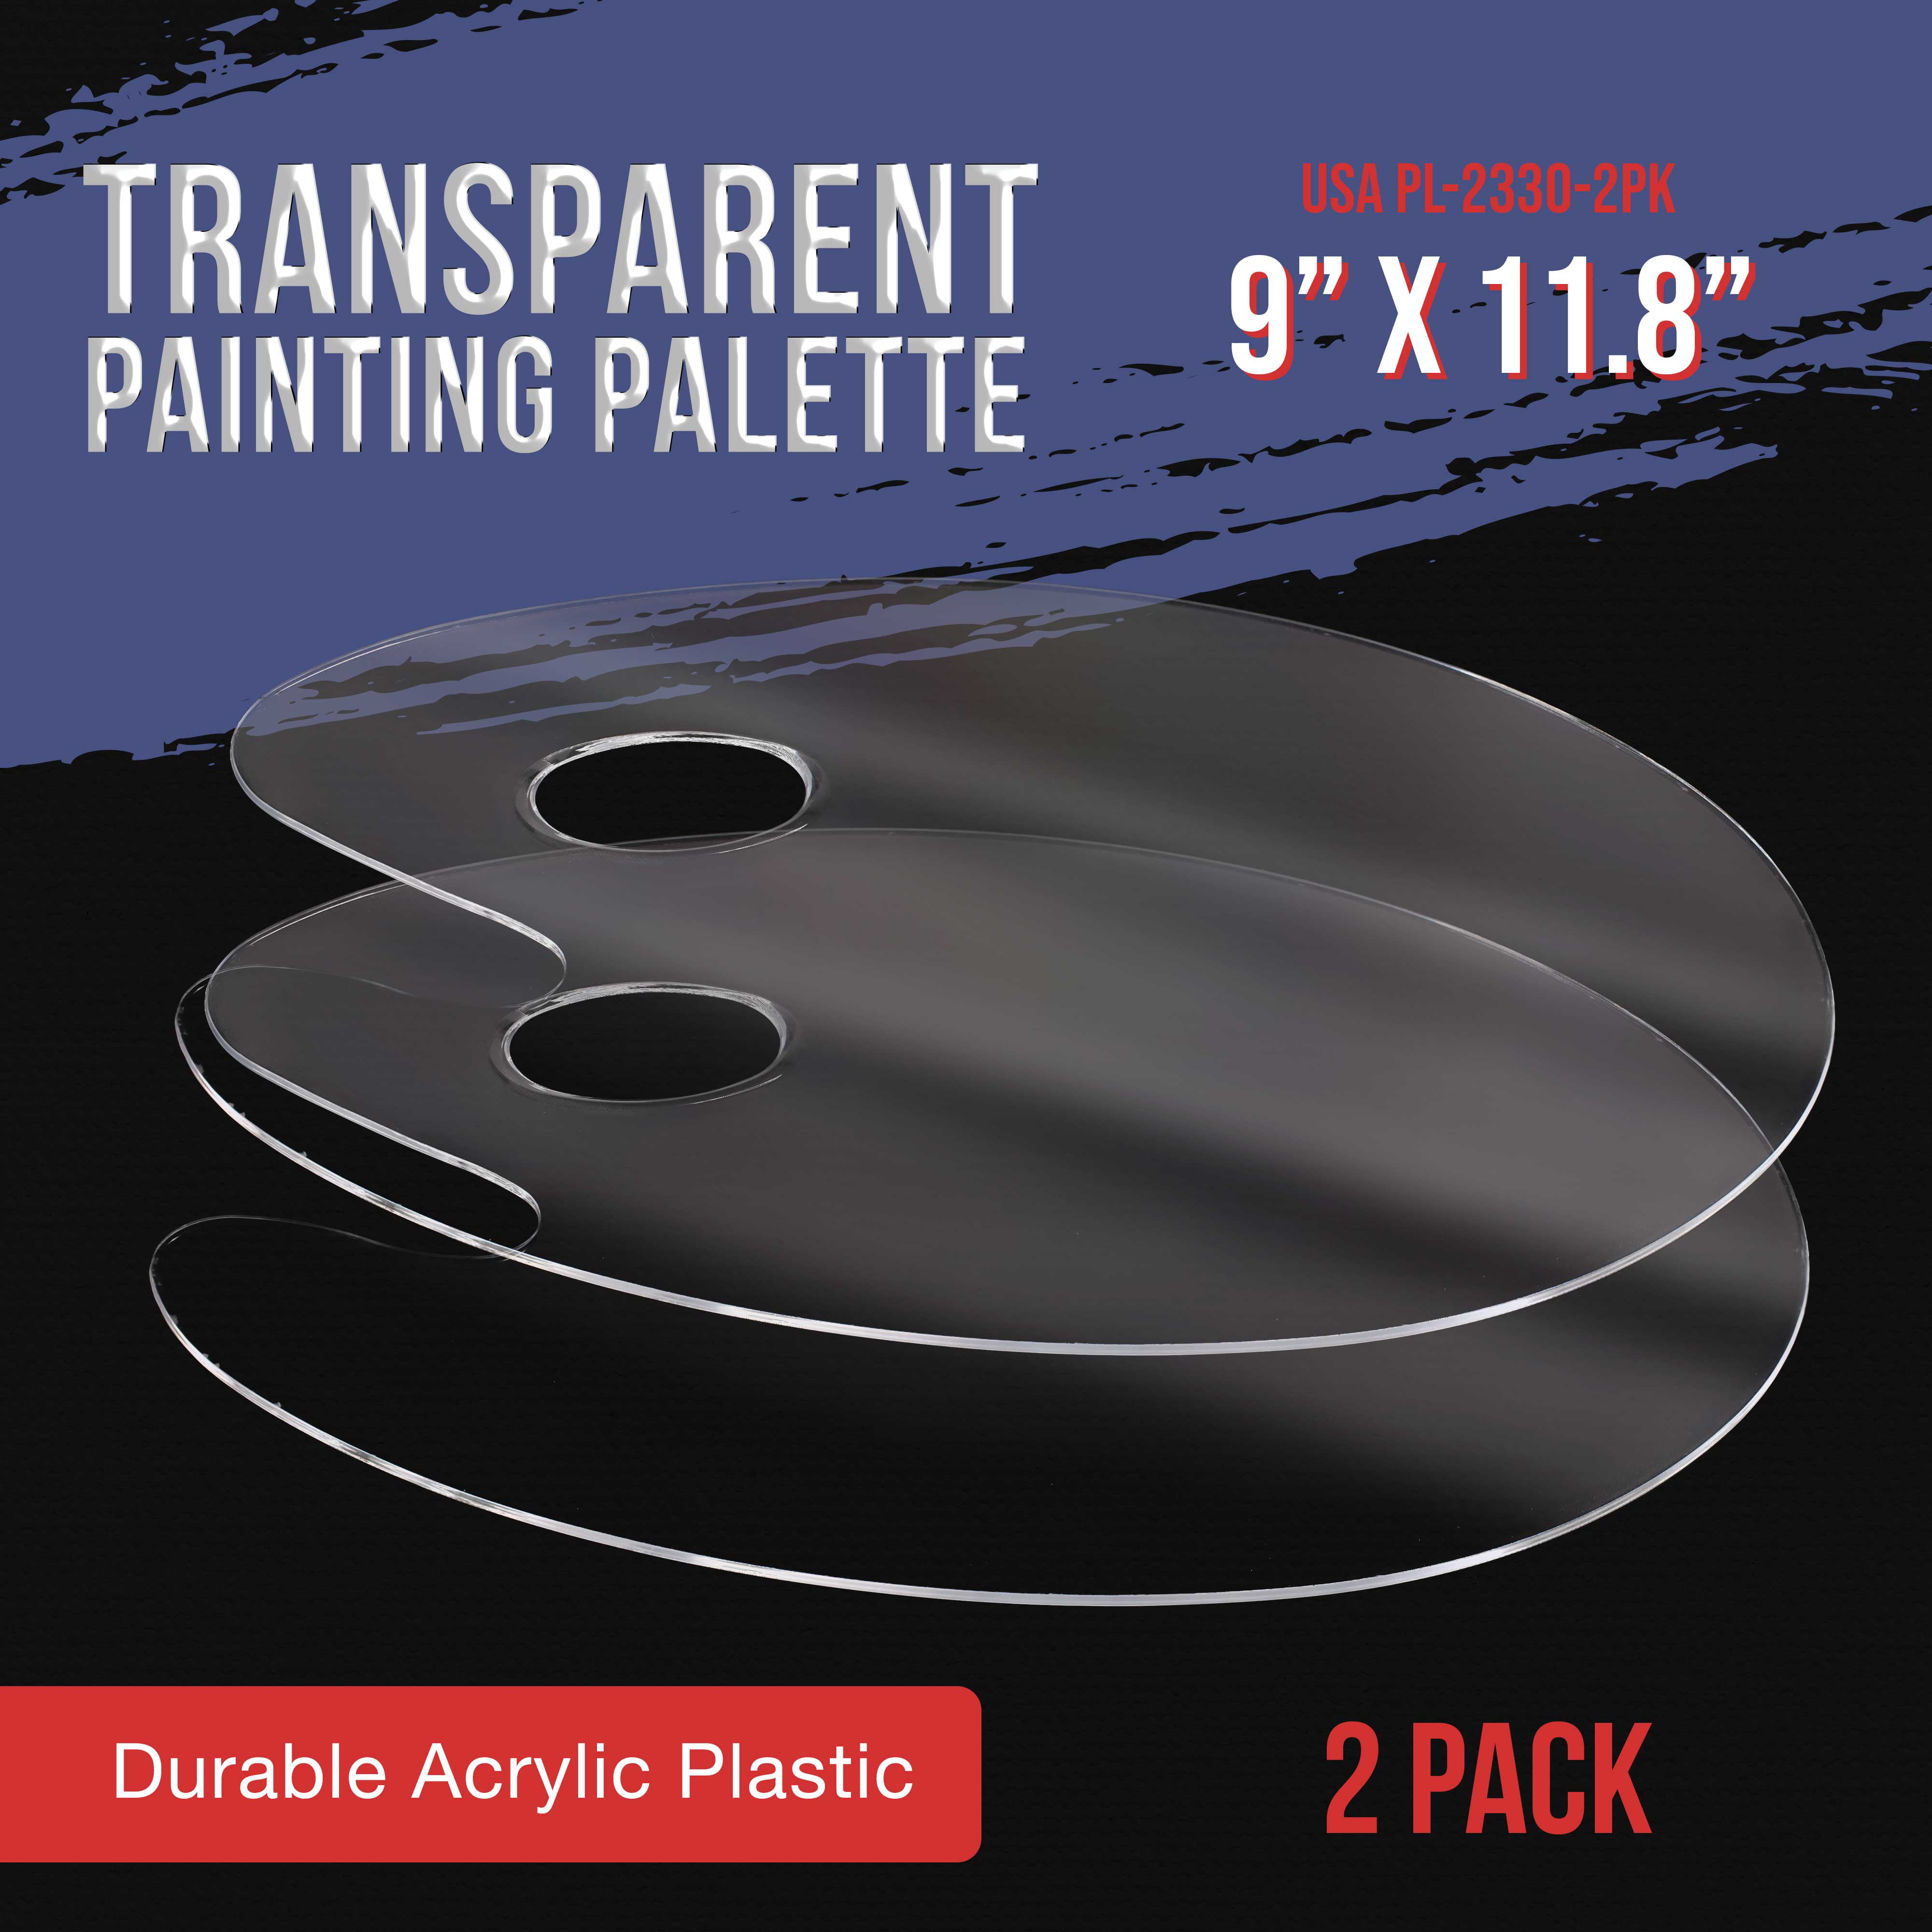  Tamaki 2 Pack 11.8 x 7.9 Inch Acrylic Paint Palette